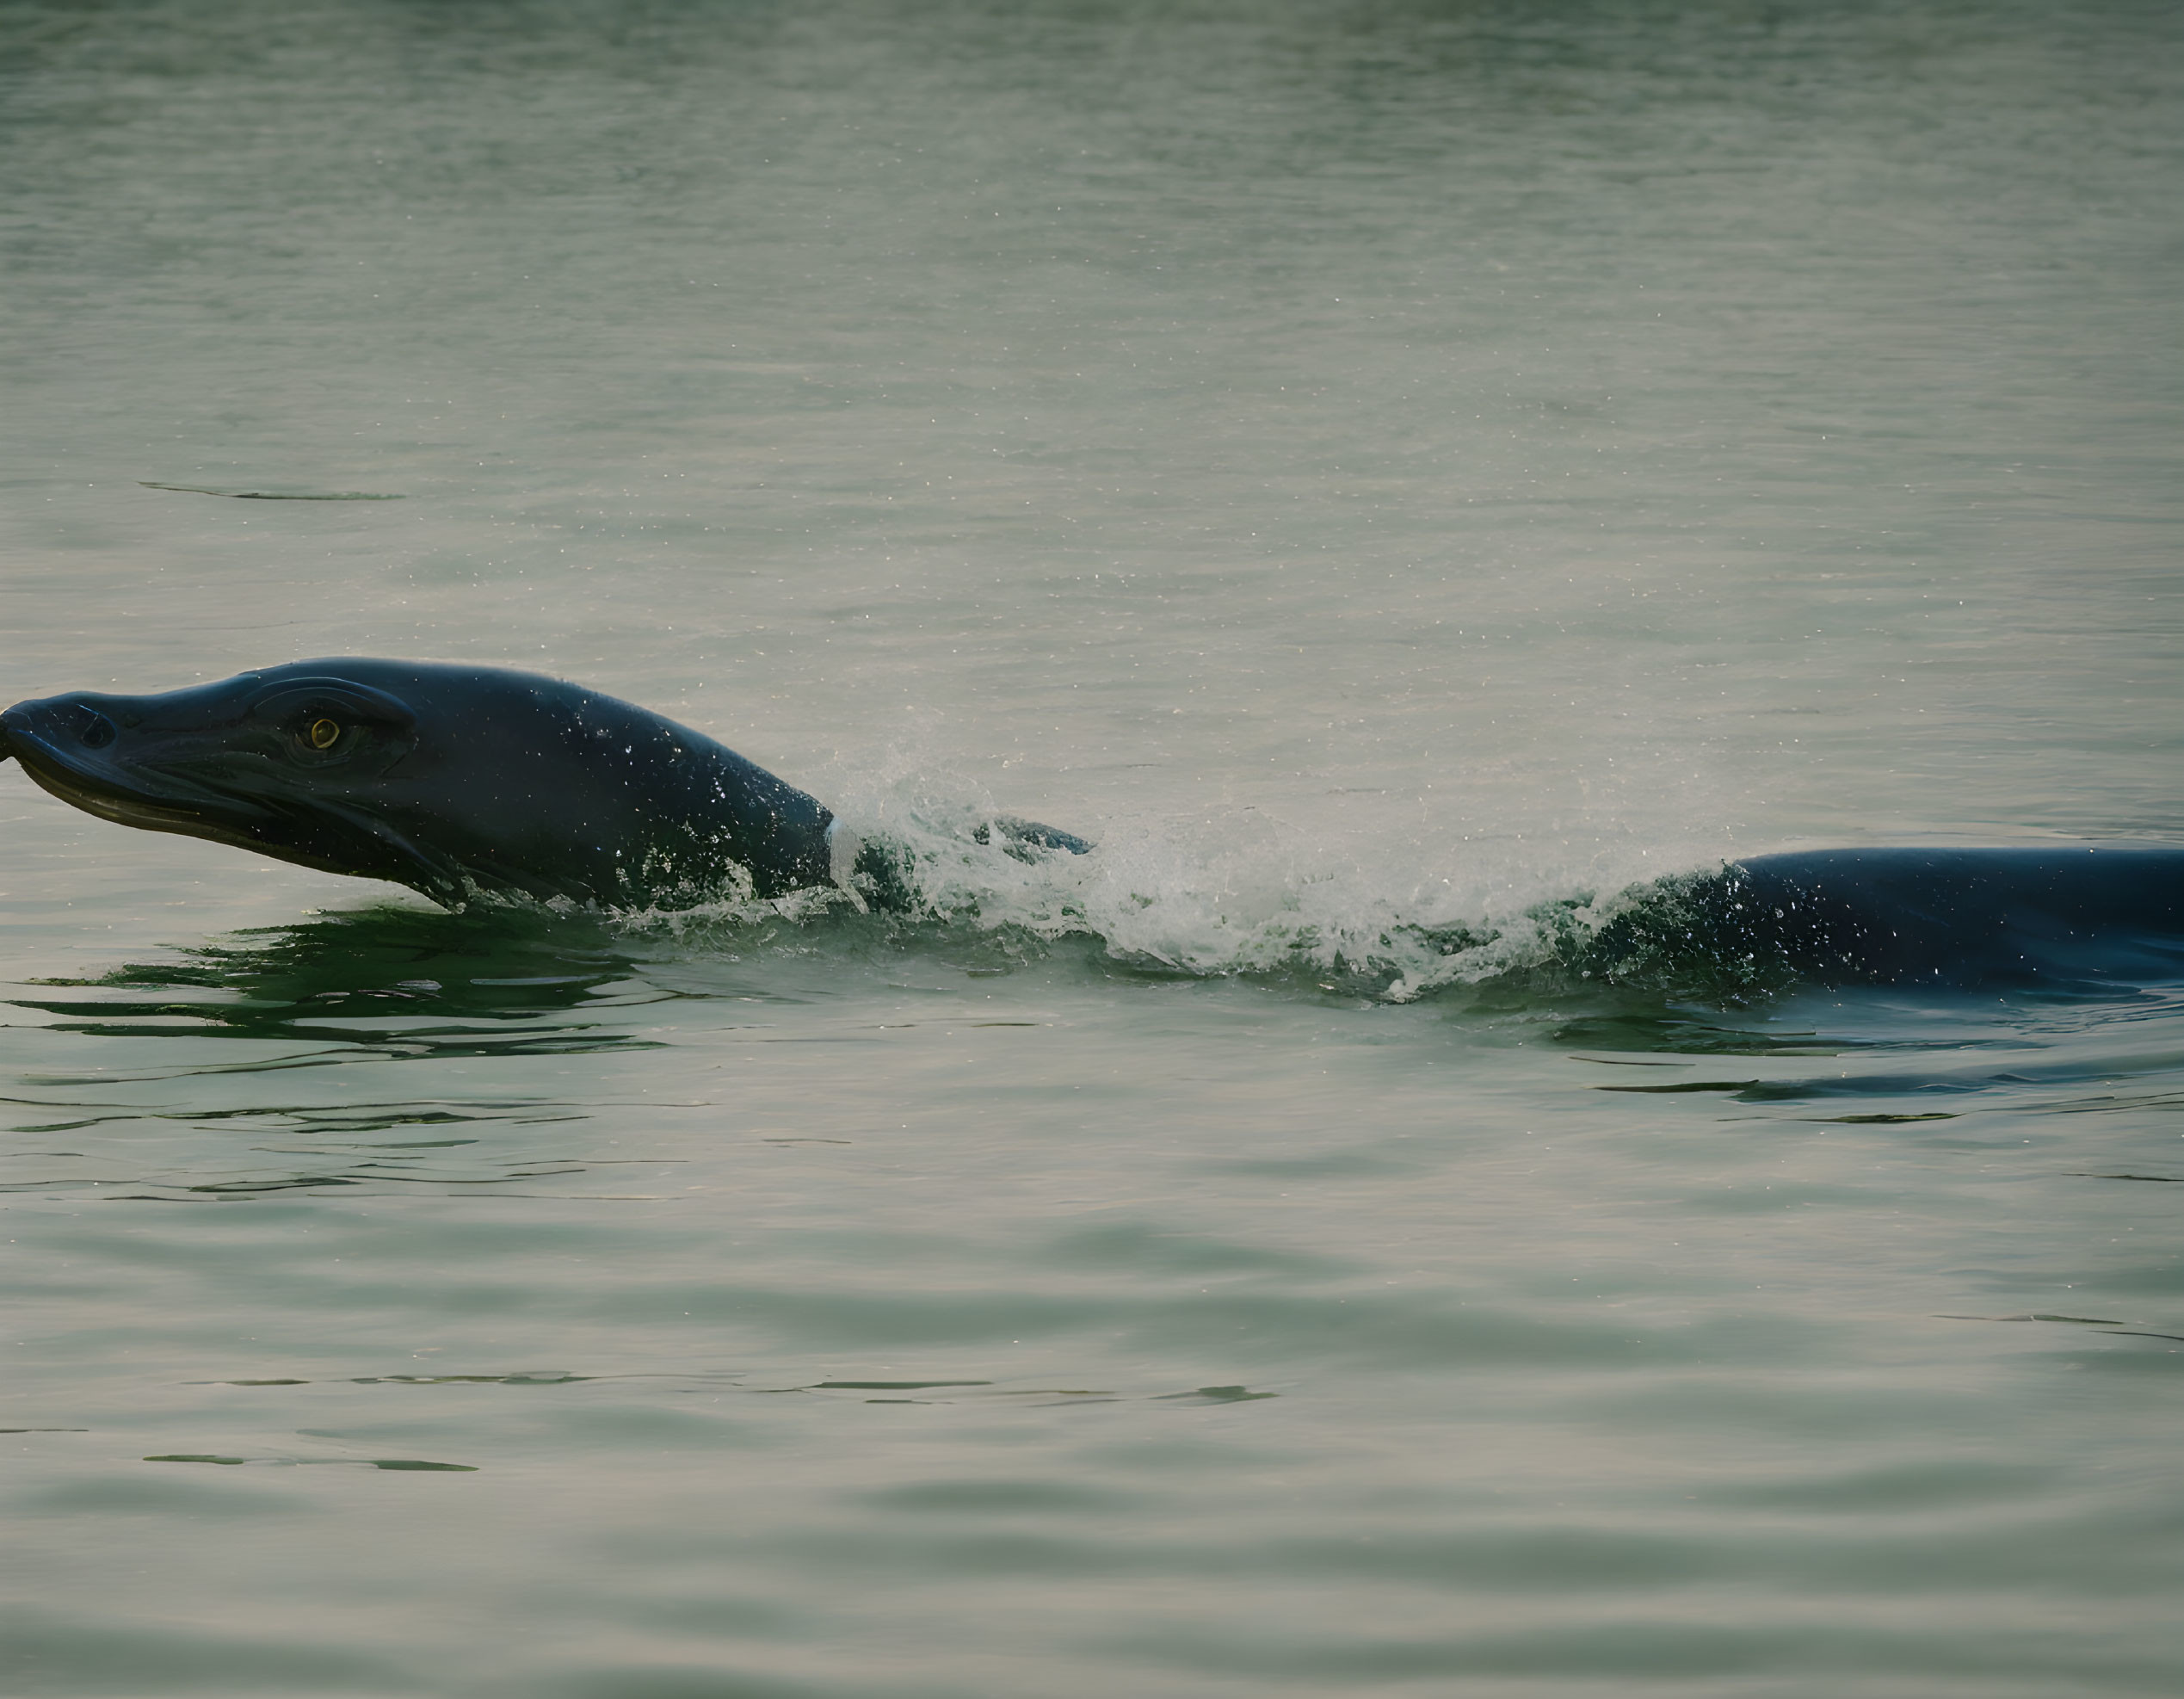 Aquatic mammal swimming, creating ripples and splashes